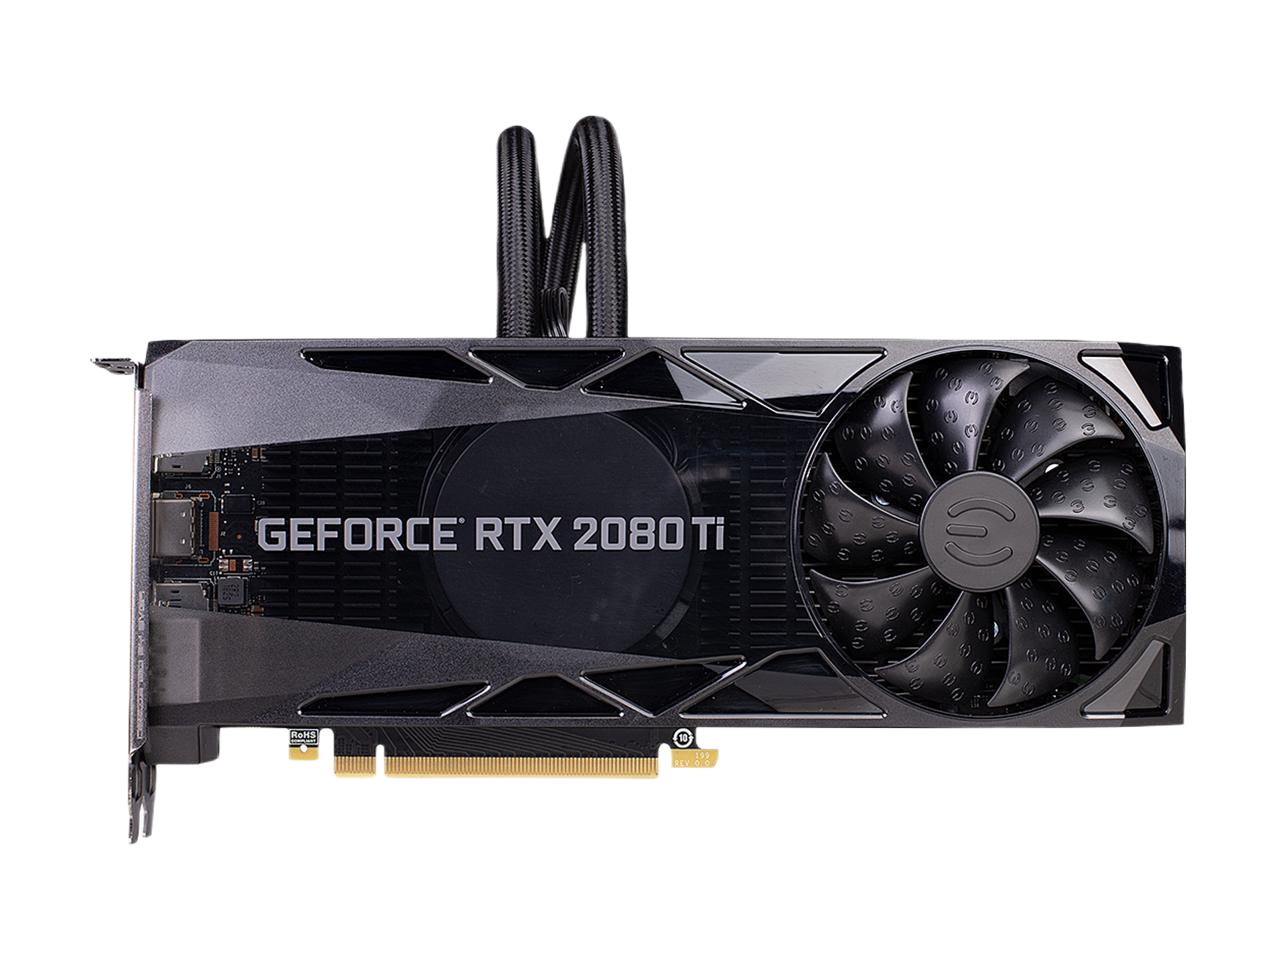 EVGA GeForce RTX 2080 Ti XC HYBRID GAMING 11GB GDDR6 HYBRID RGB LED Logo Metal Backplate Graphics Card 11G-P4-2384-KR